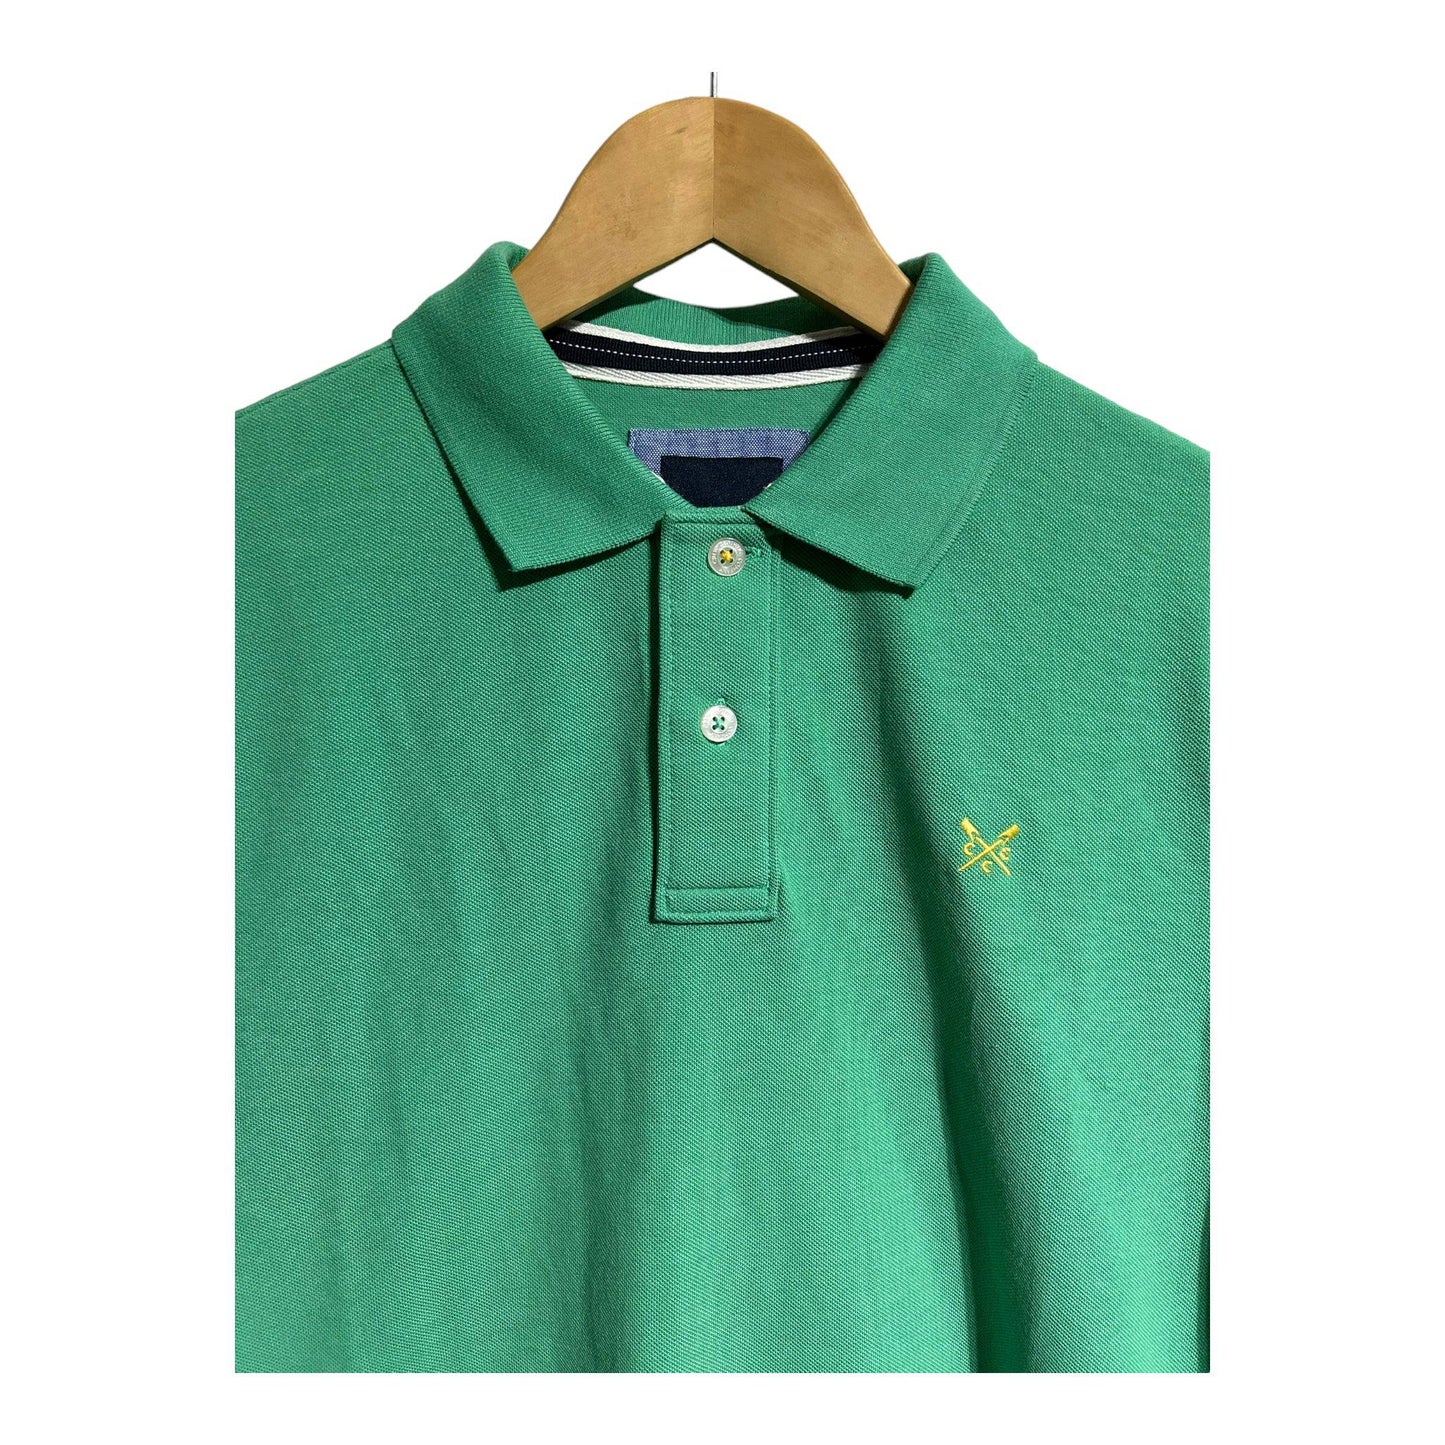 Crew Clothing Company Classic Pique Polo Shirt - Recurring.Life